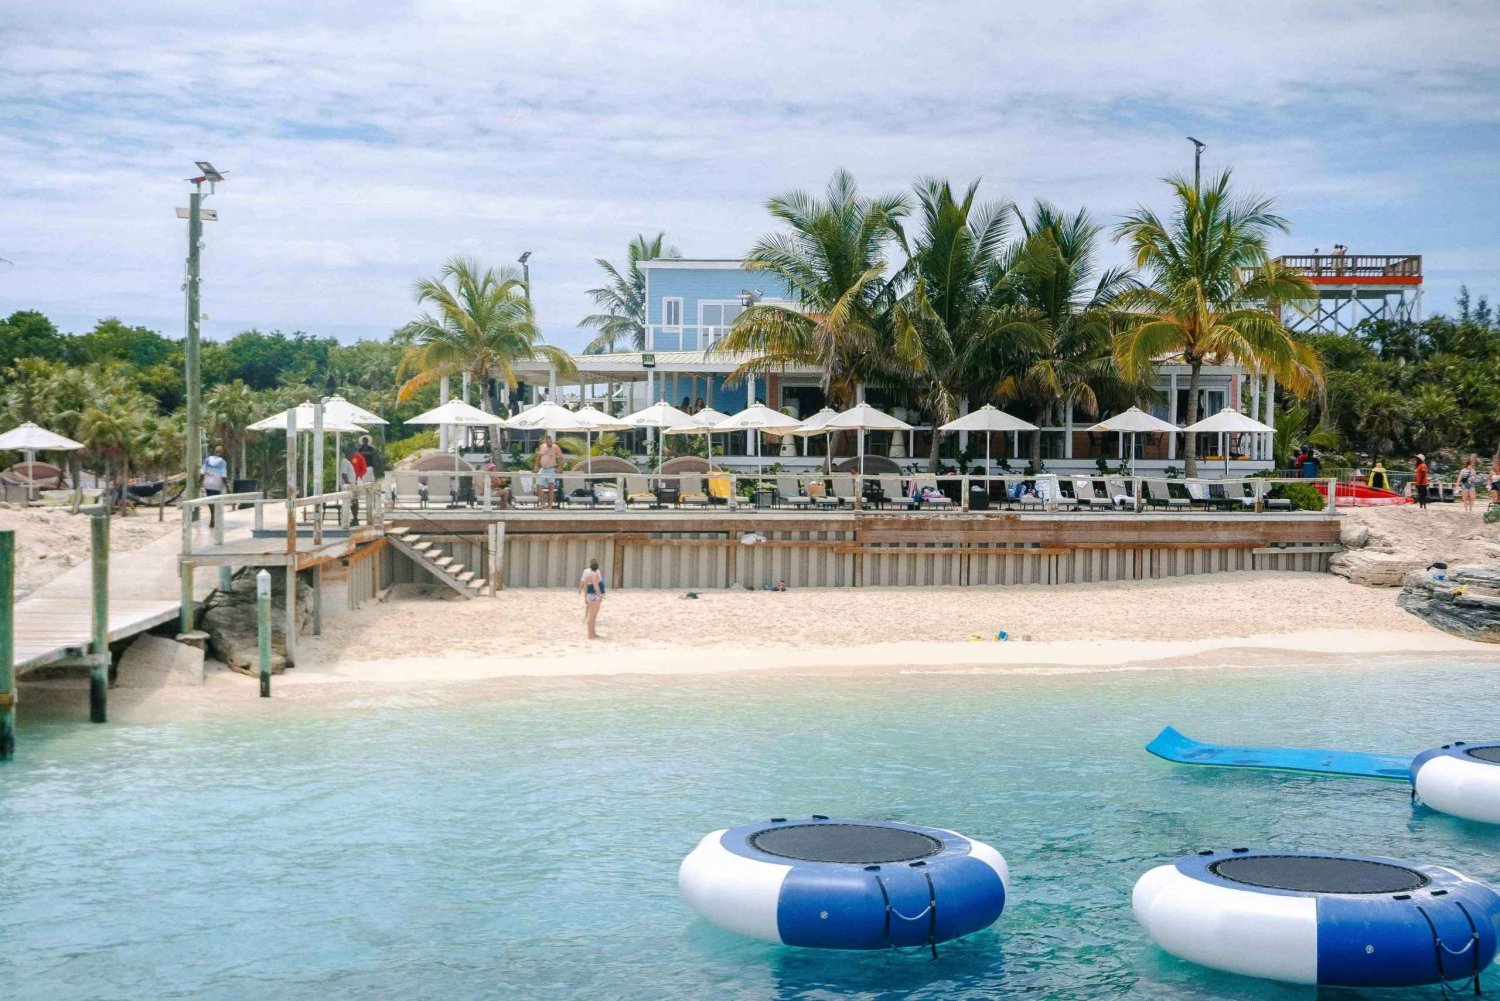 Sand Dollar Beach Resort on Rose Island Bahamas: Day Away